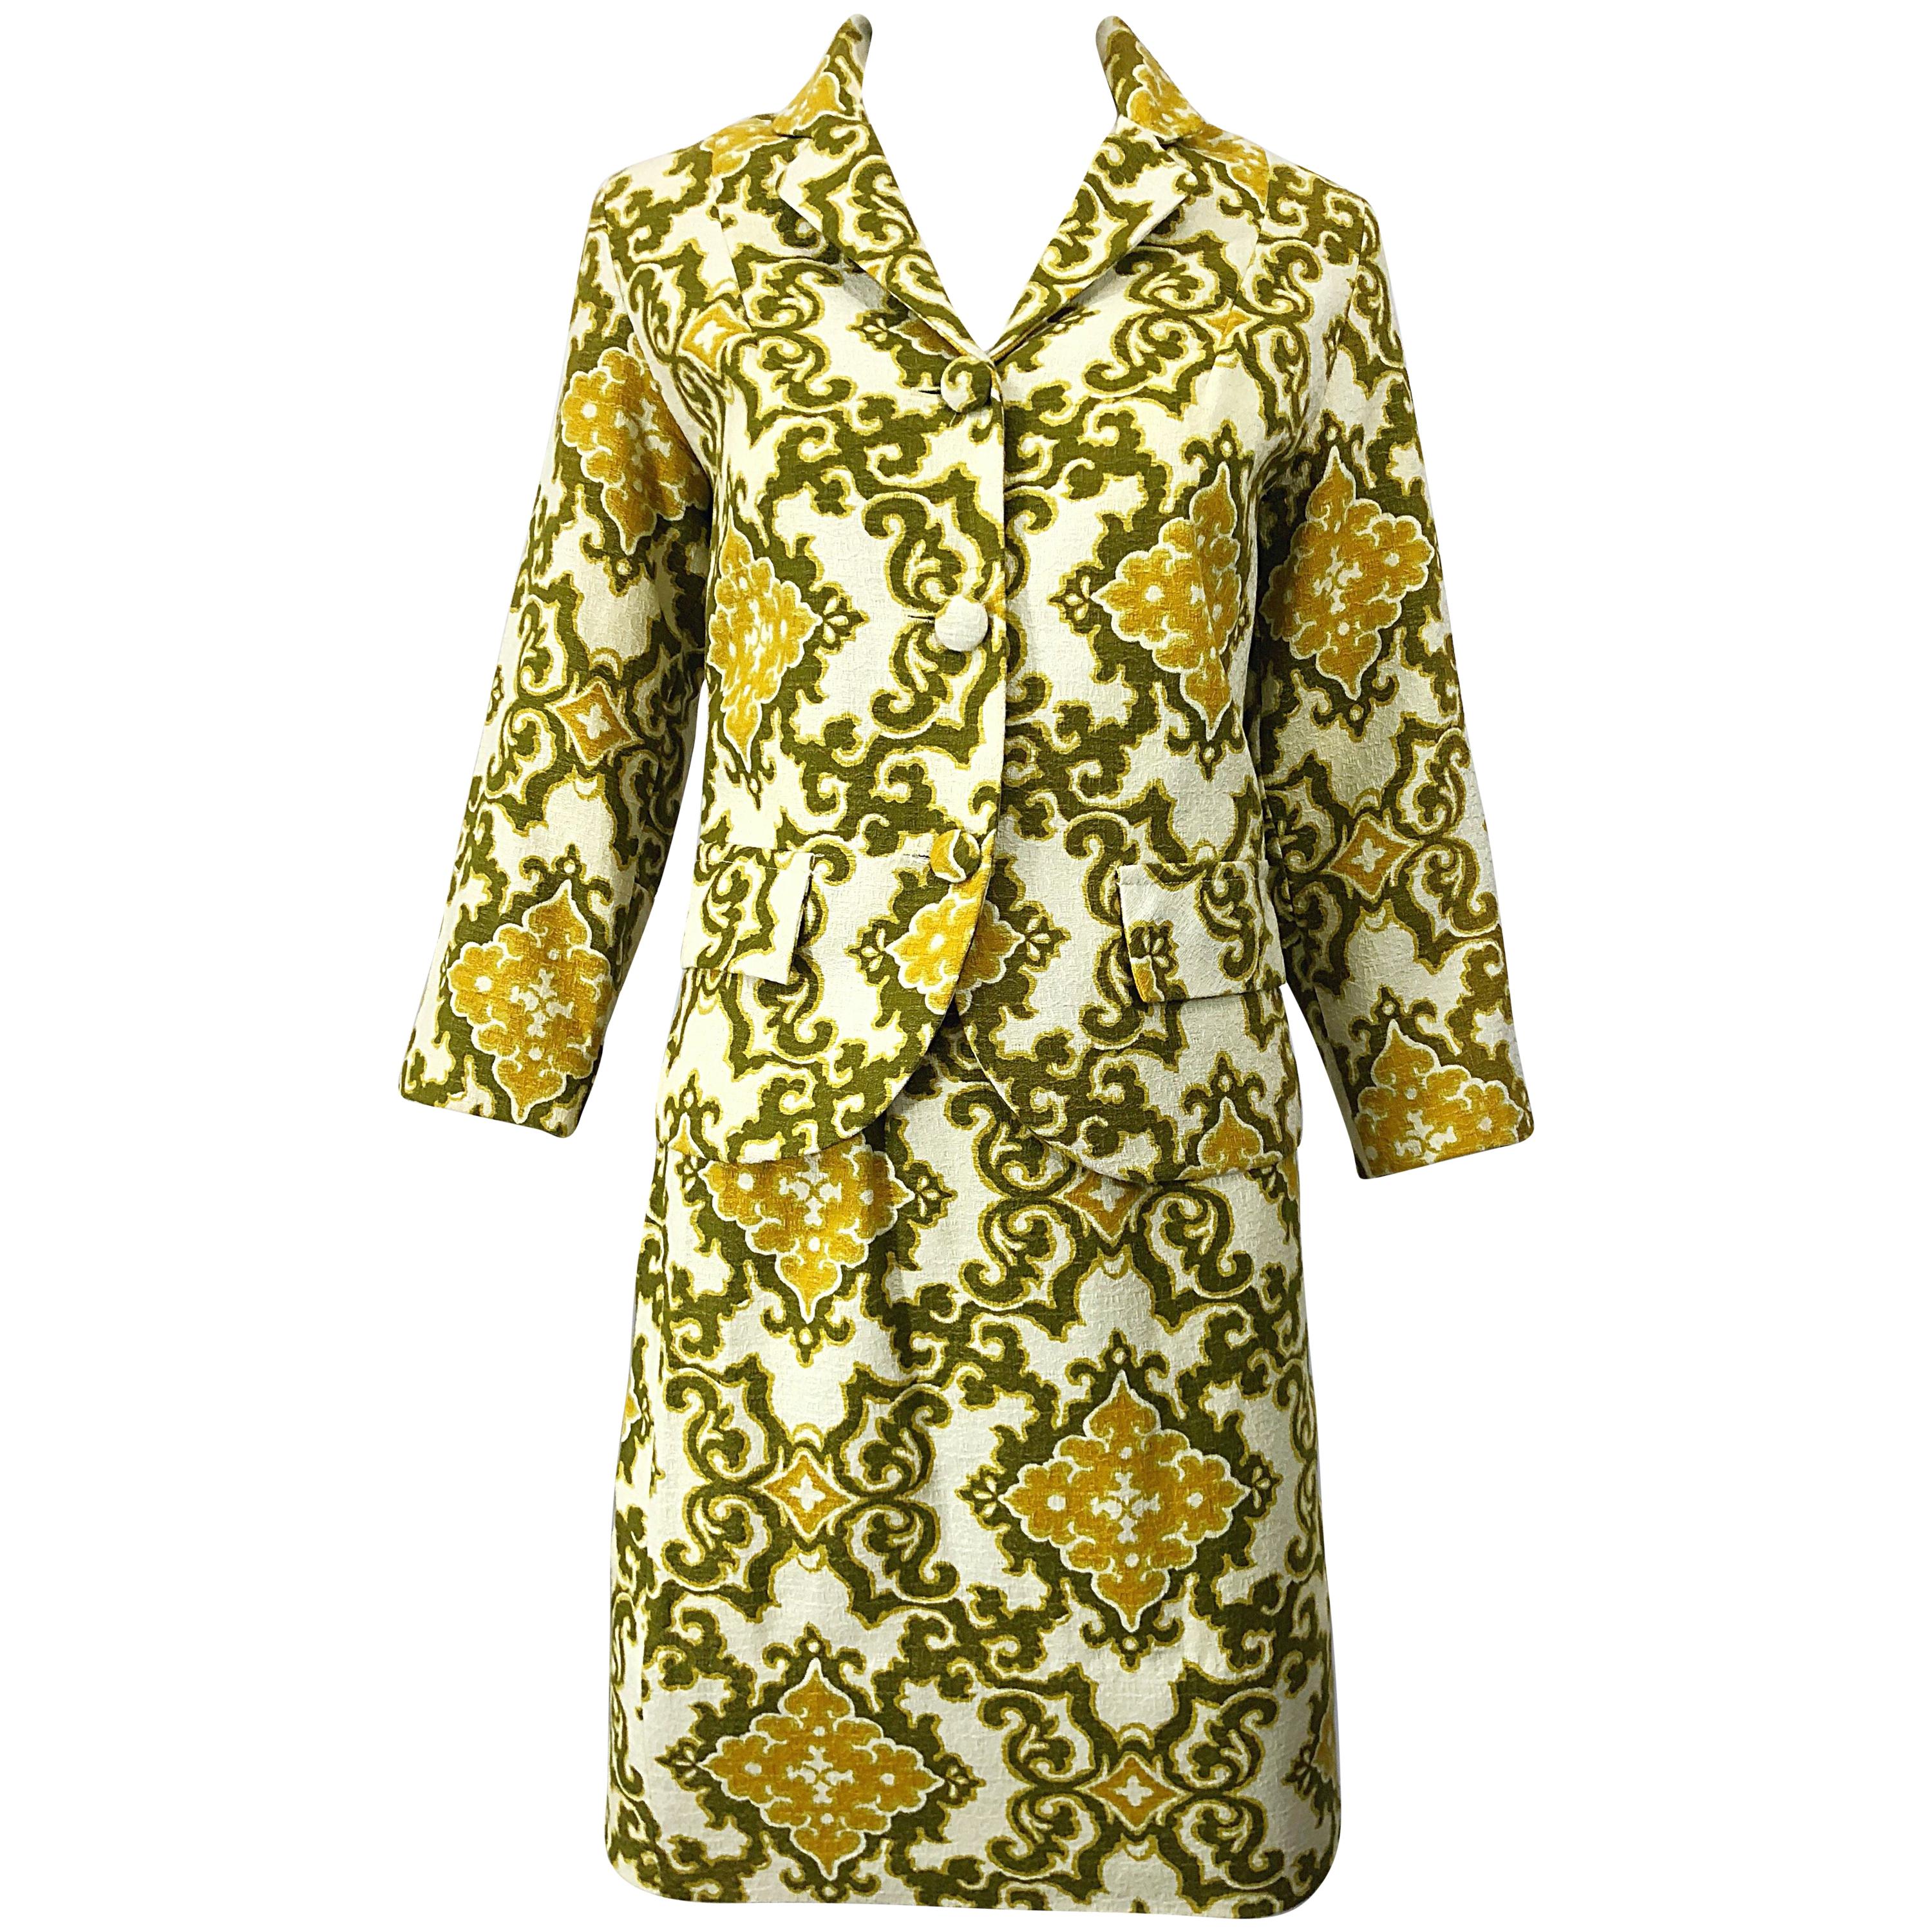 Chic 1960s Joseph Magnin Baroque Print Chartreuse Silk + Cotton 60s Skirt Suit